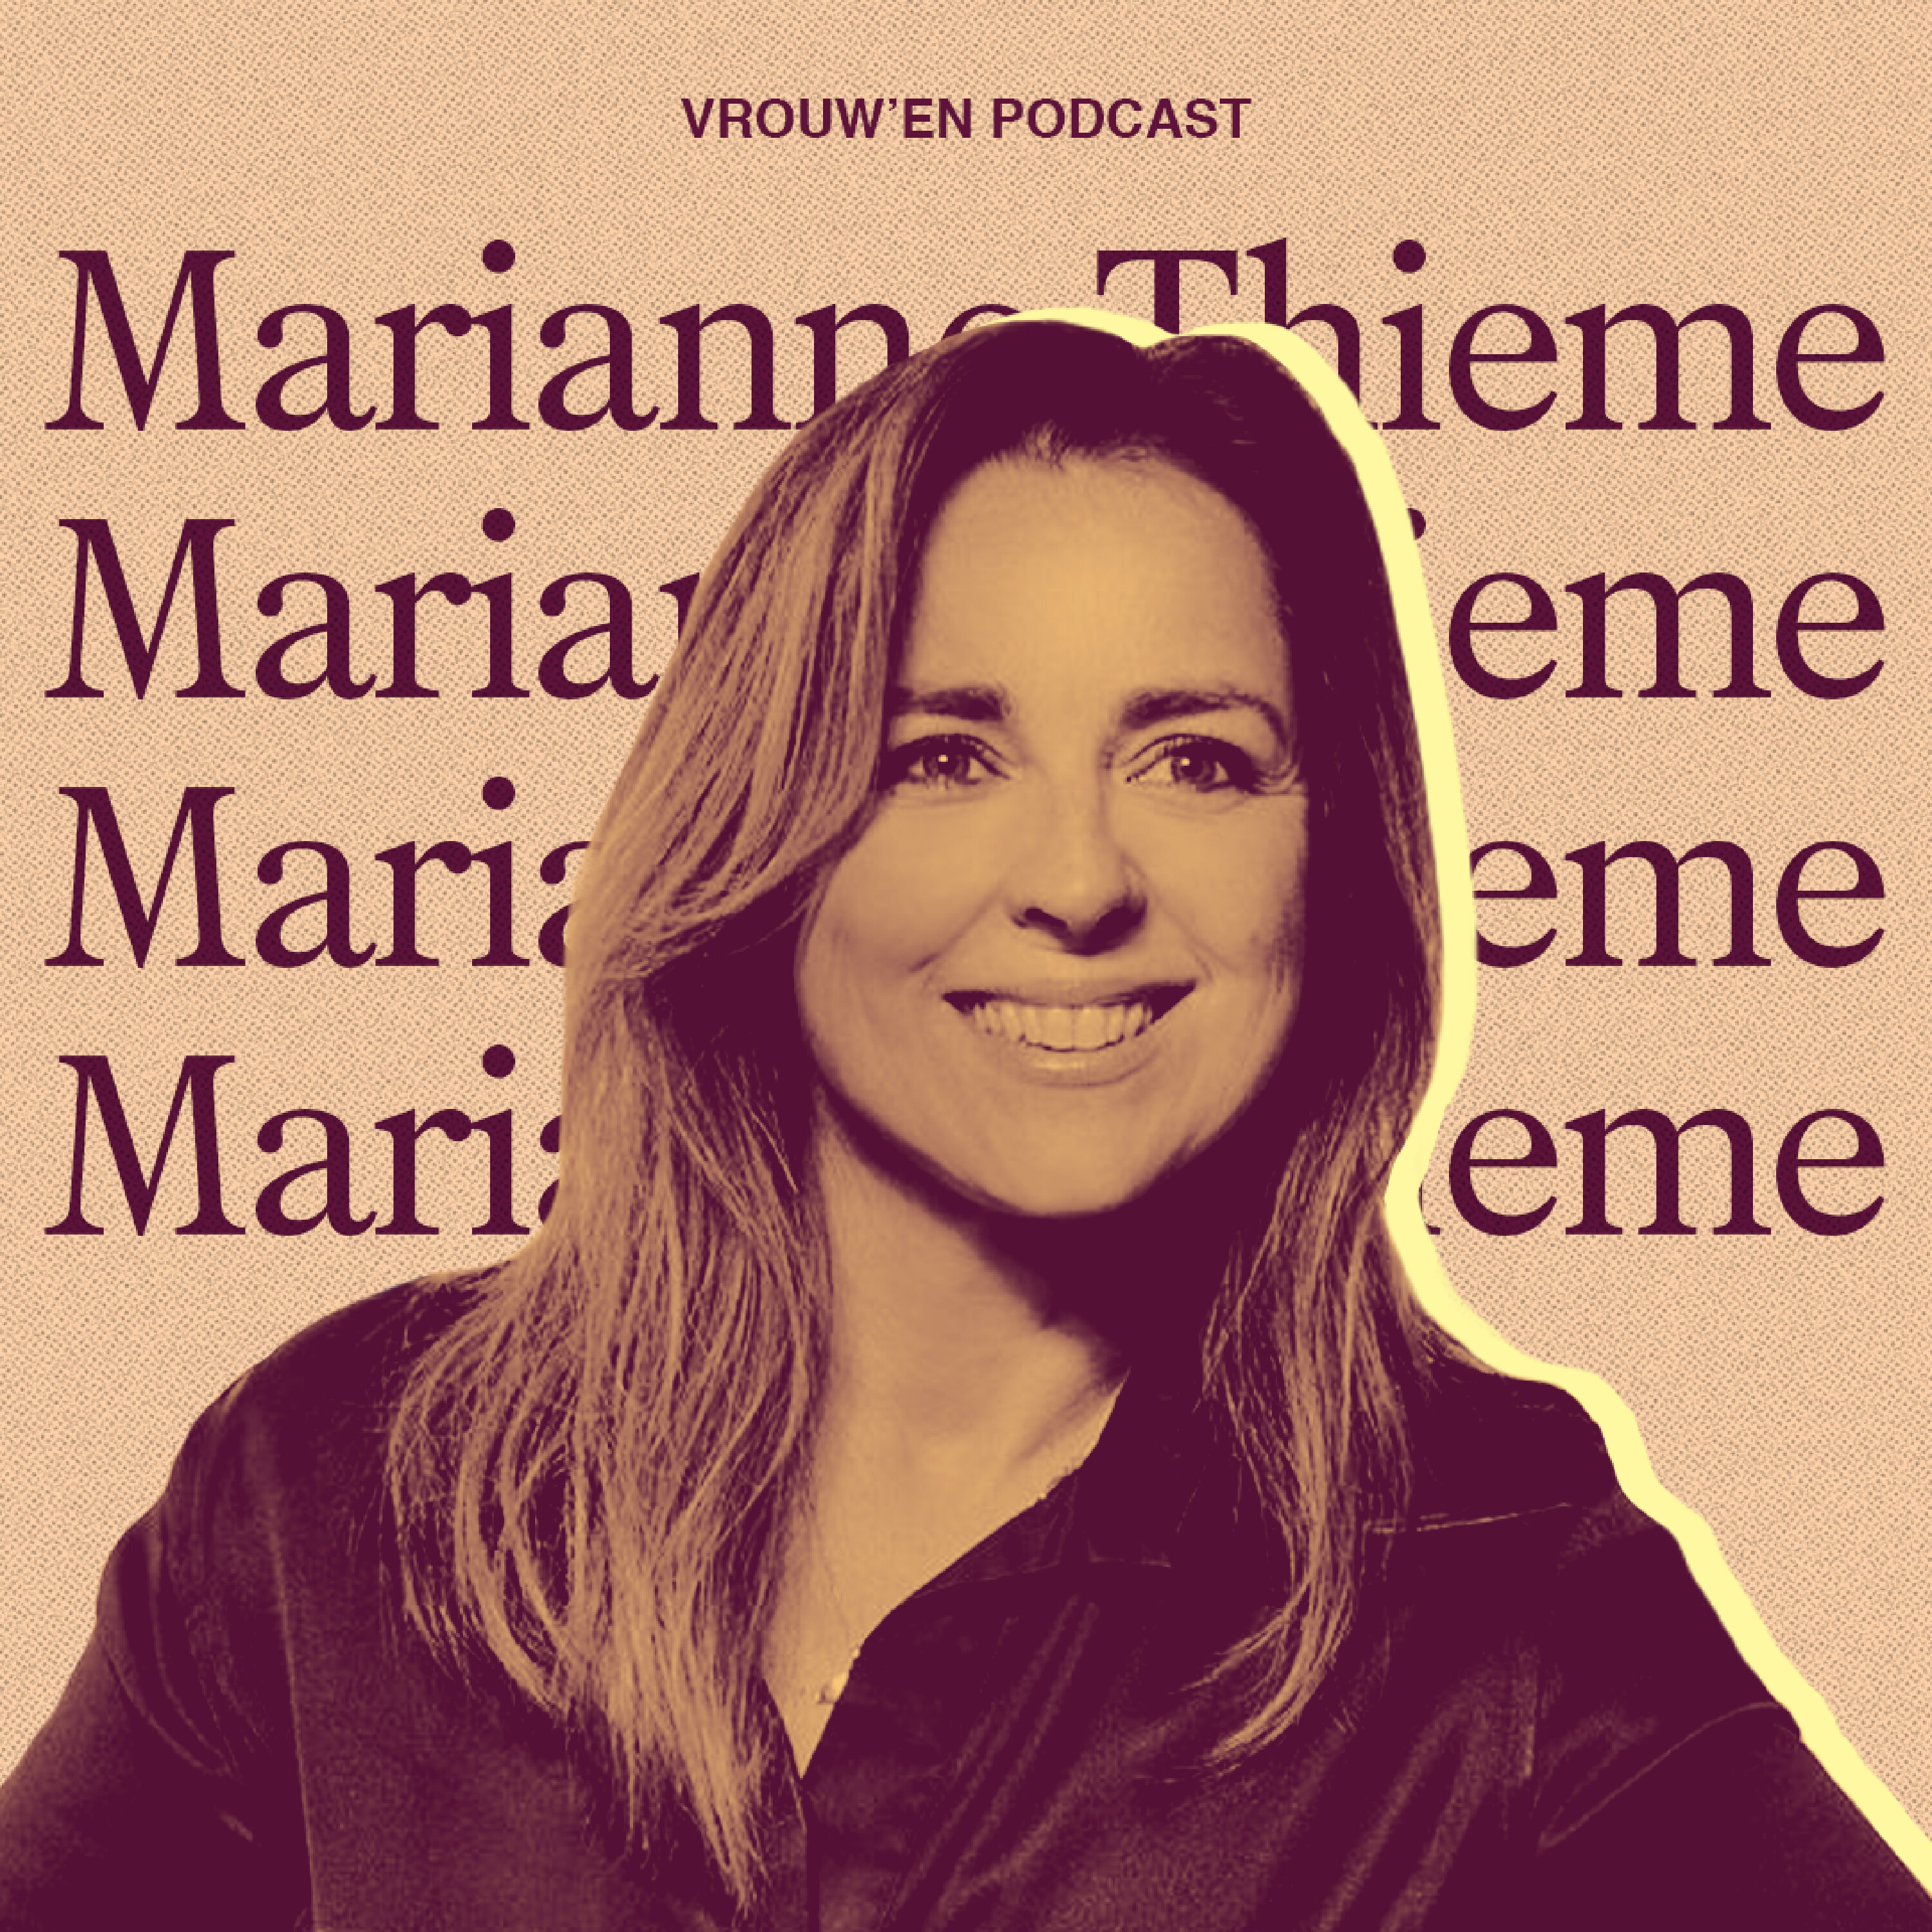 Vrouw'en - Marianne Thieme over female power, carrière naast moederschap & idealen